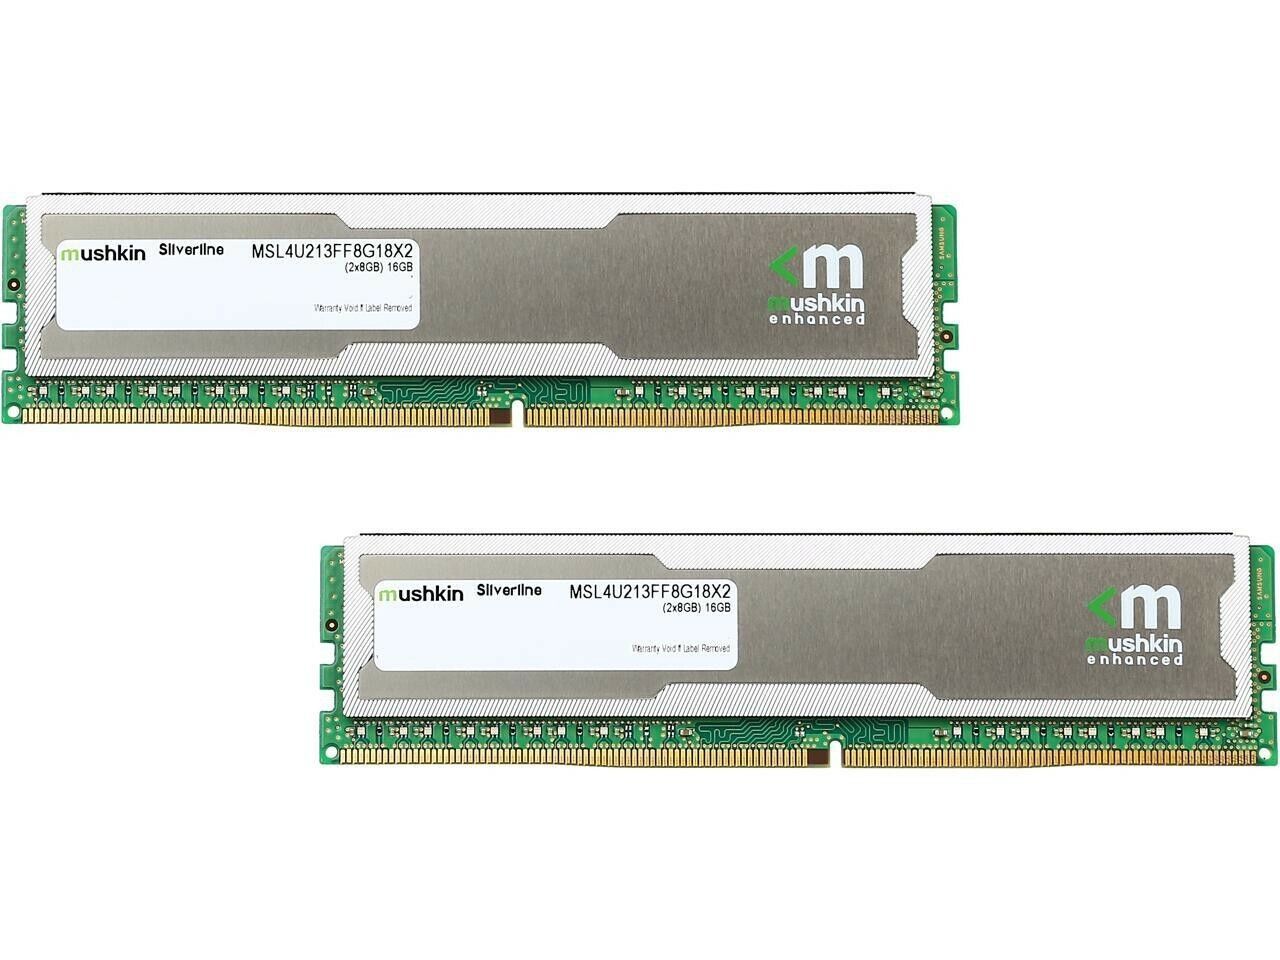 Mushkin Enhanced Silverline DDR4-2133MHz RAM